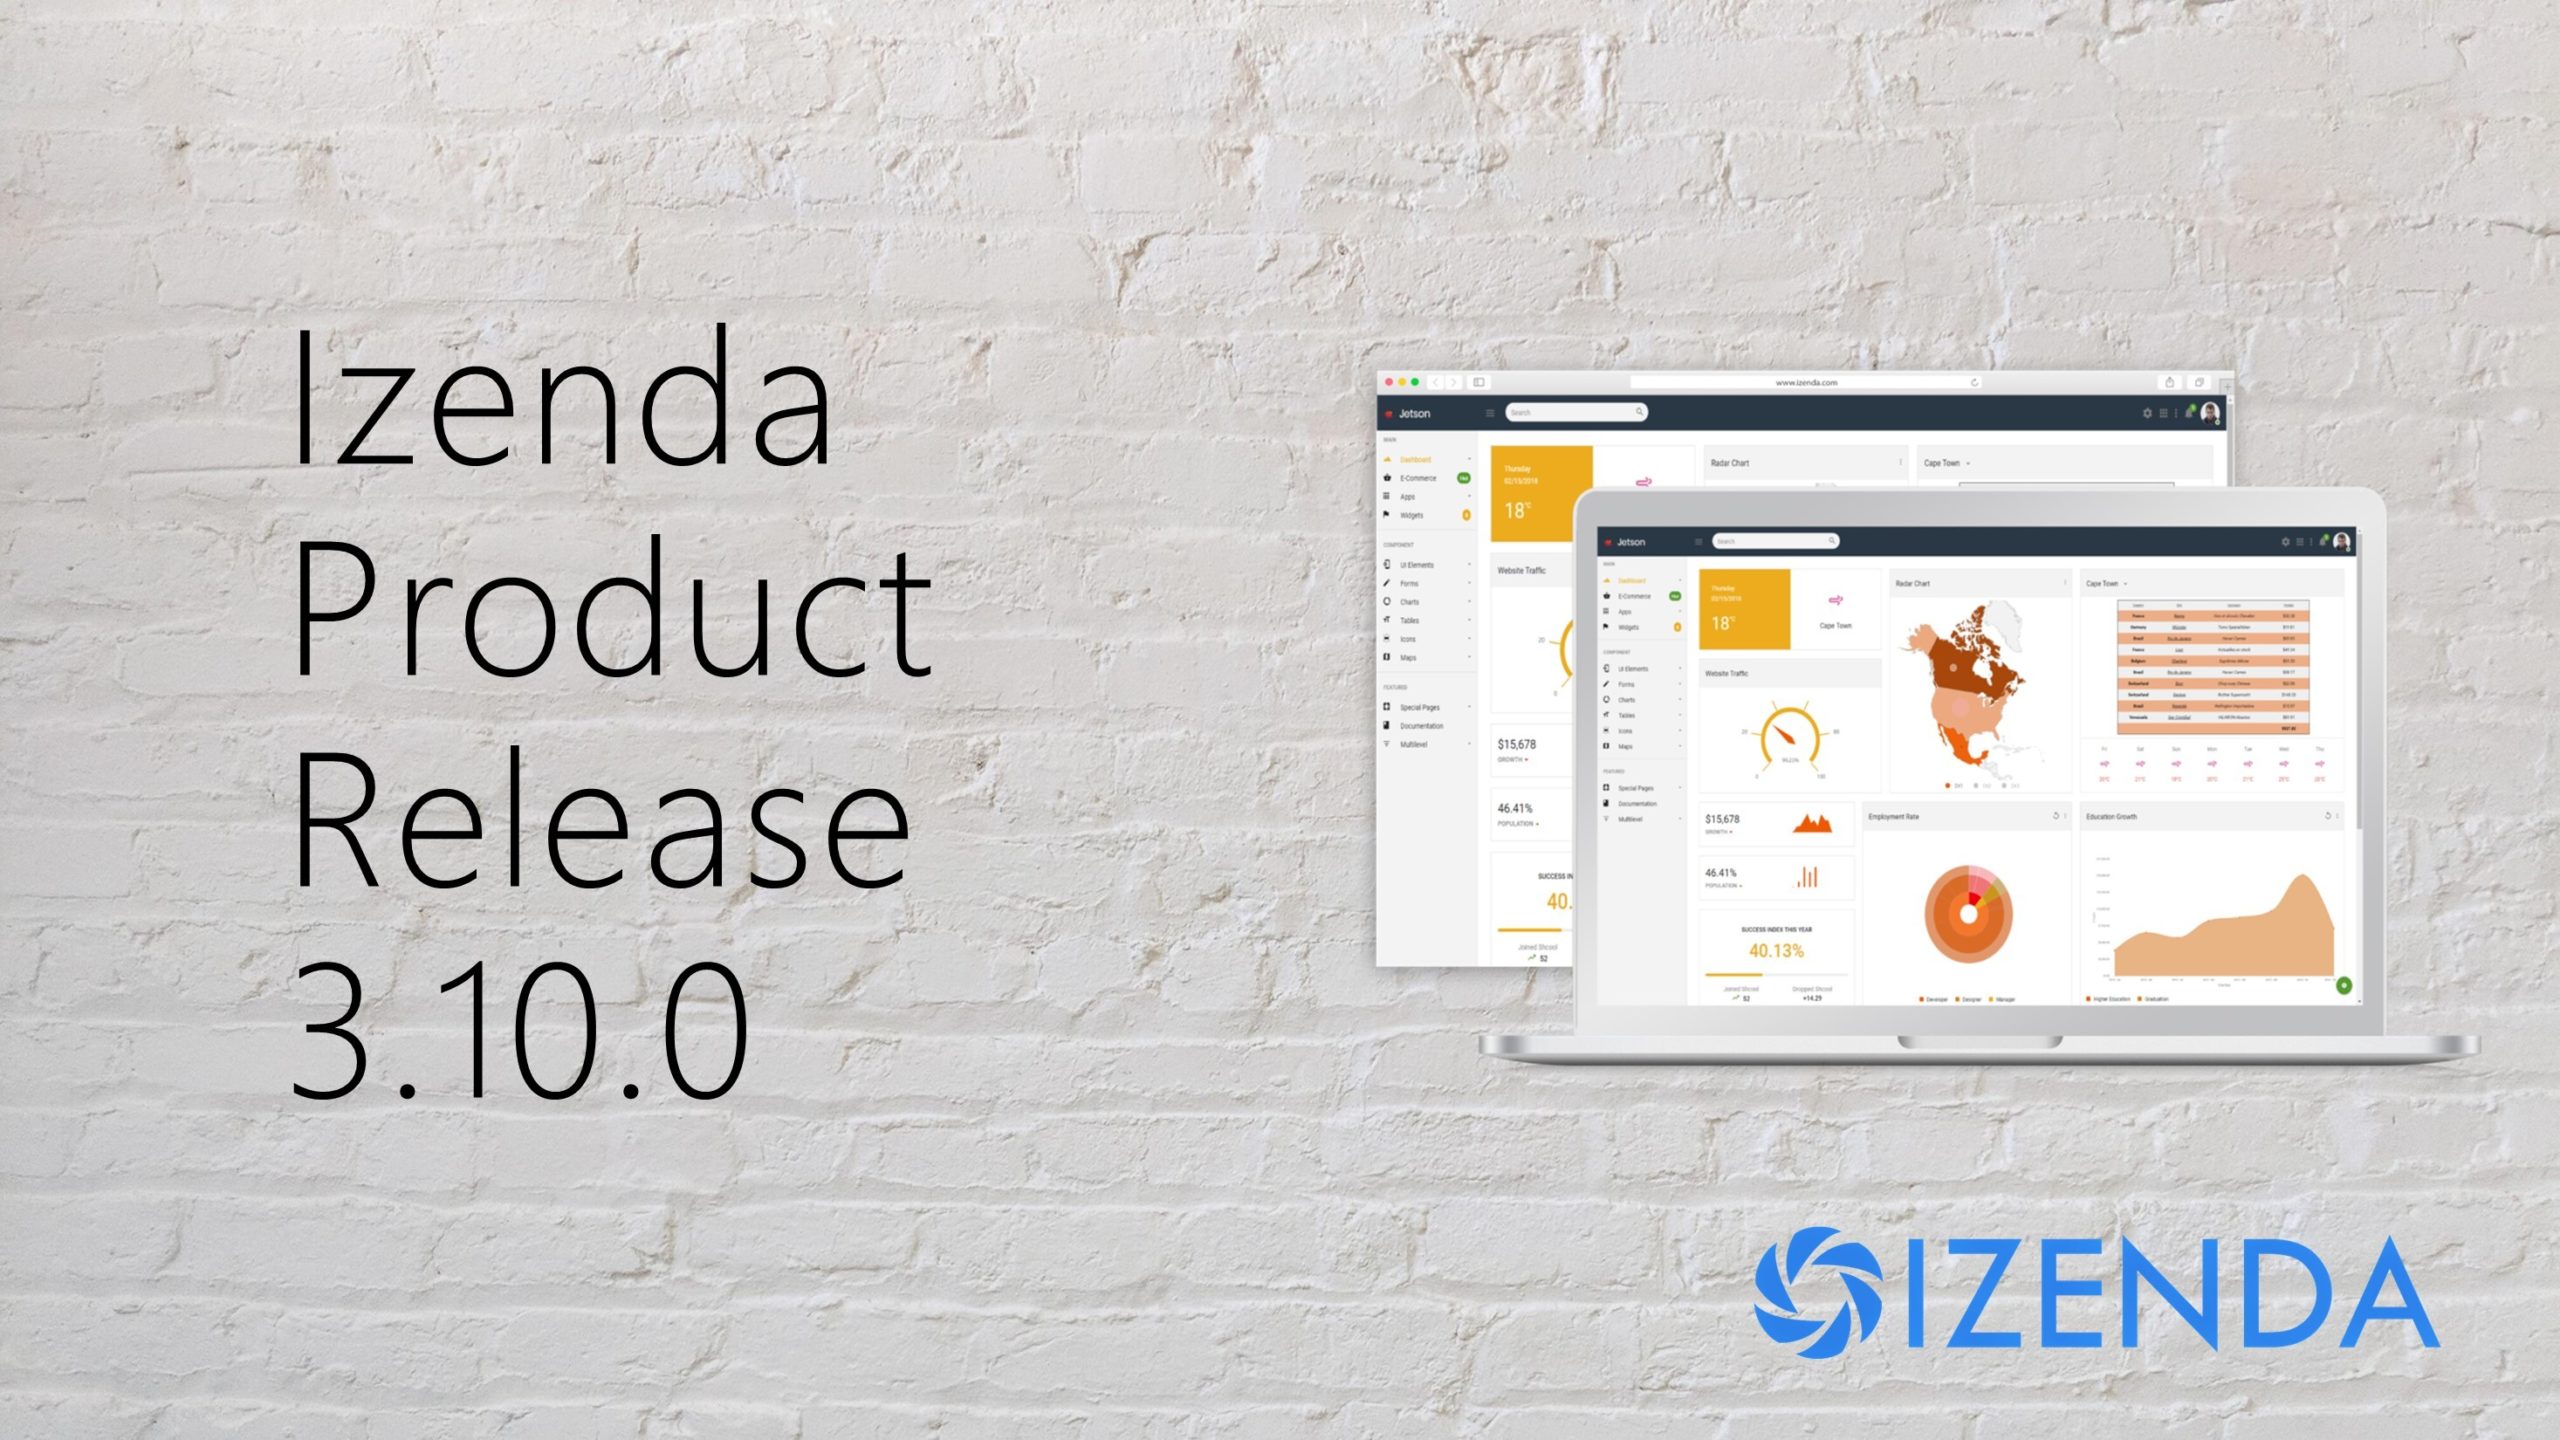 izenda product release 3.10.0